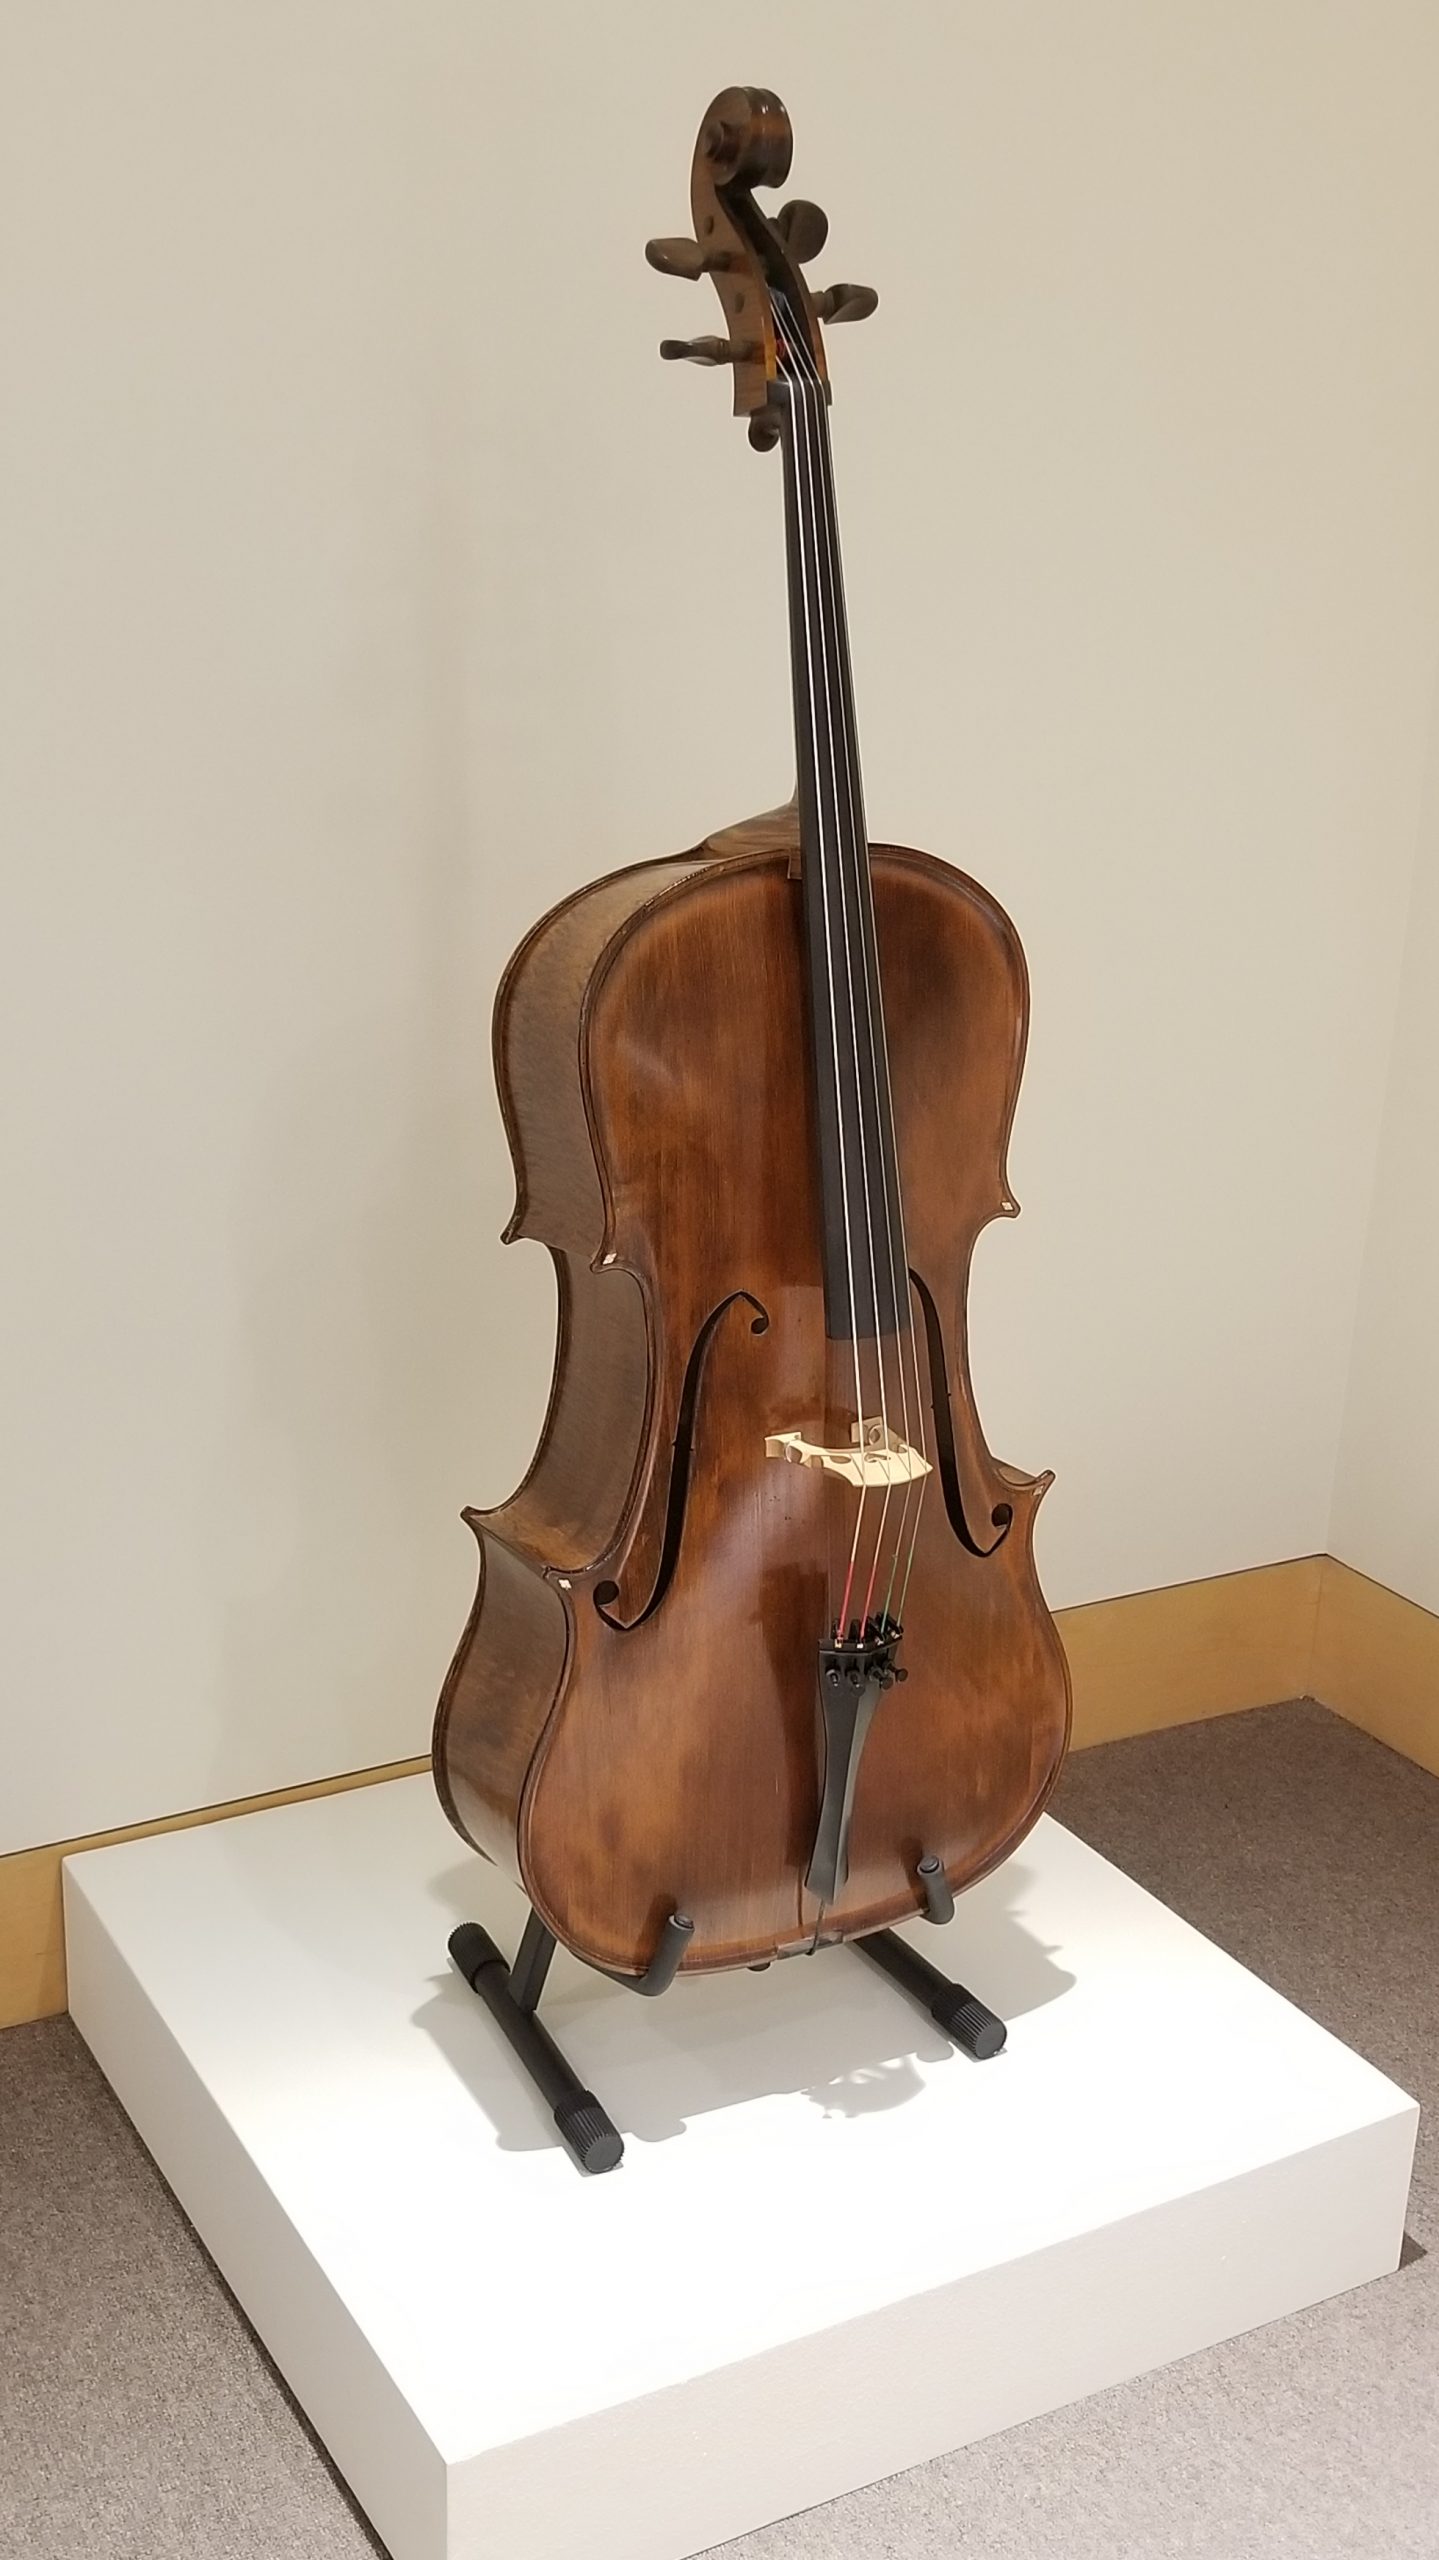 Cello, Geneva 1.0, 2020, wood, Courtesy of the artist